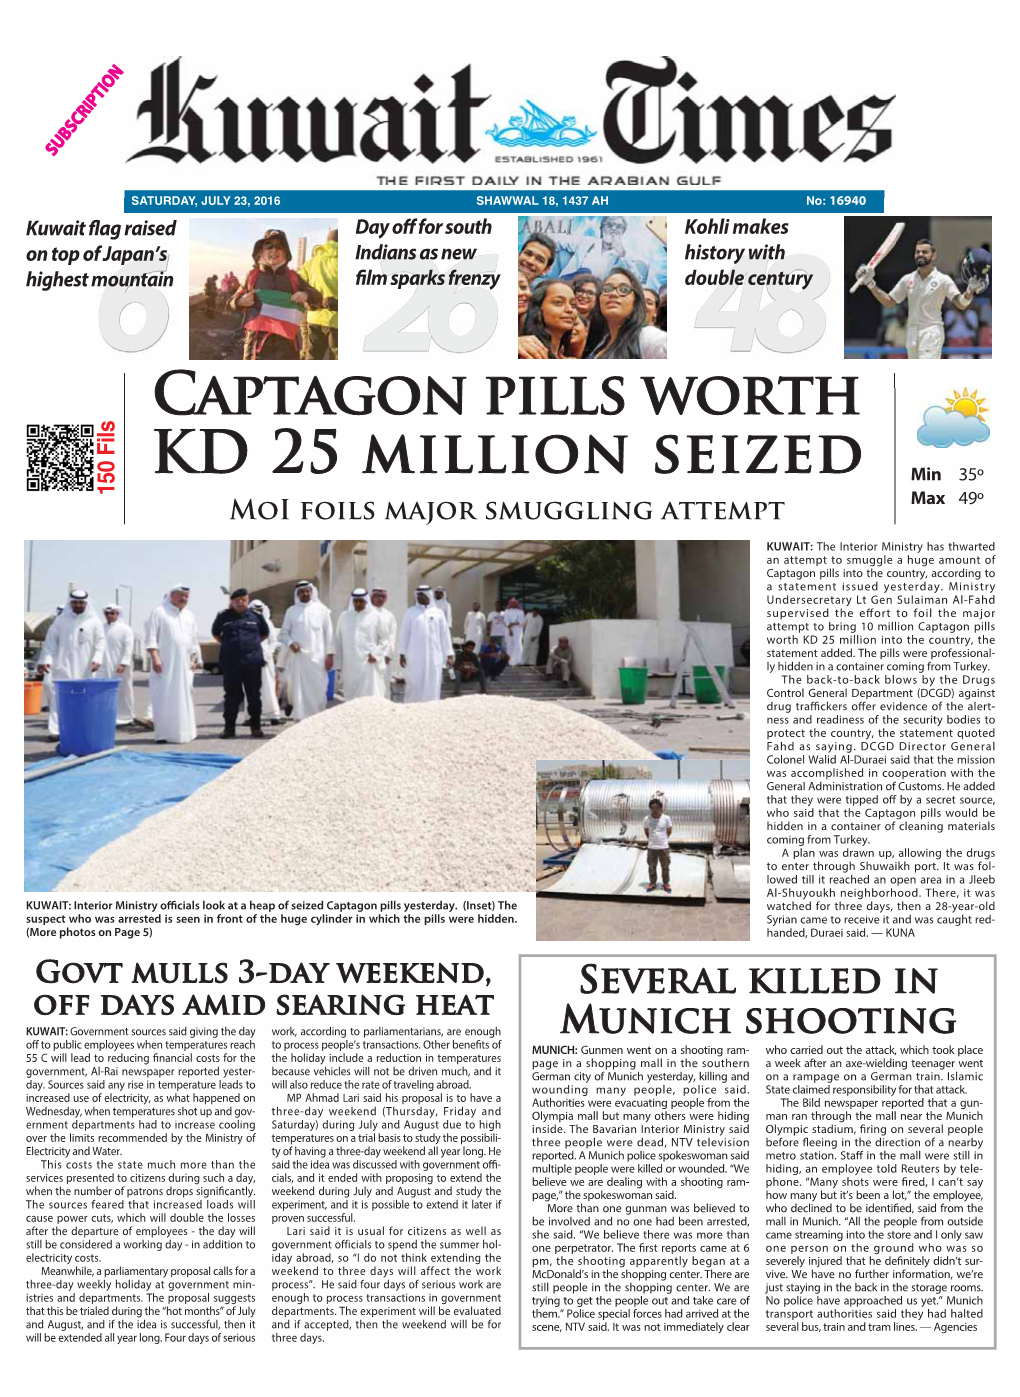 Captagon Pills Worth KD 25 Million Seized